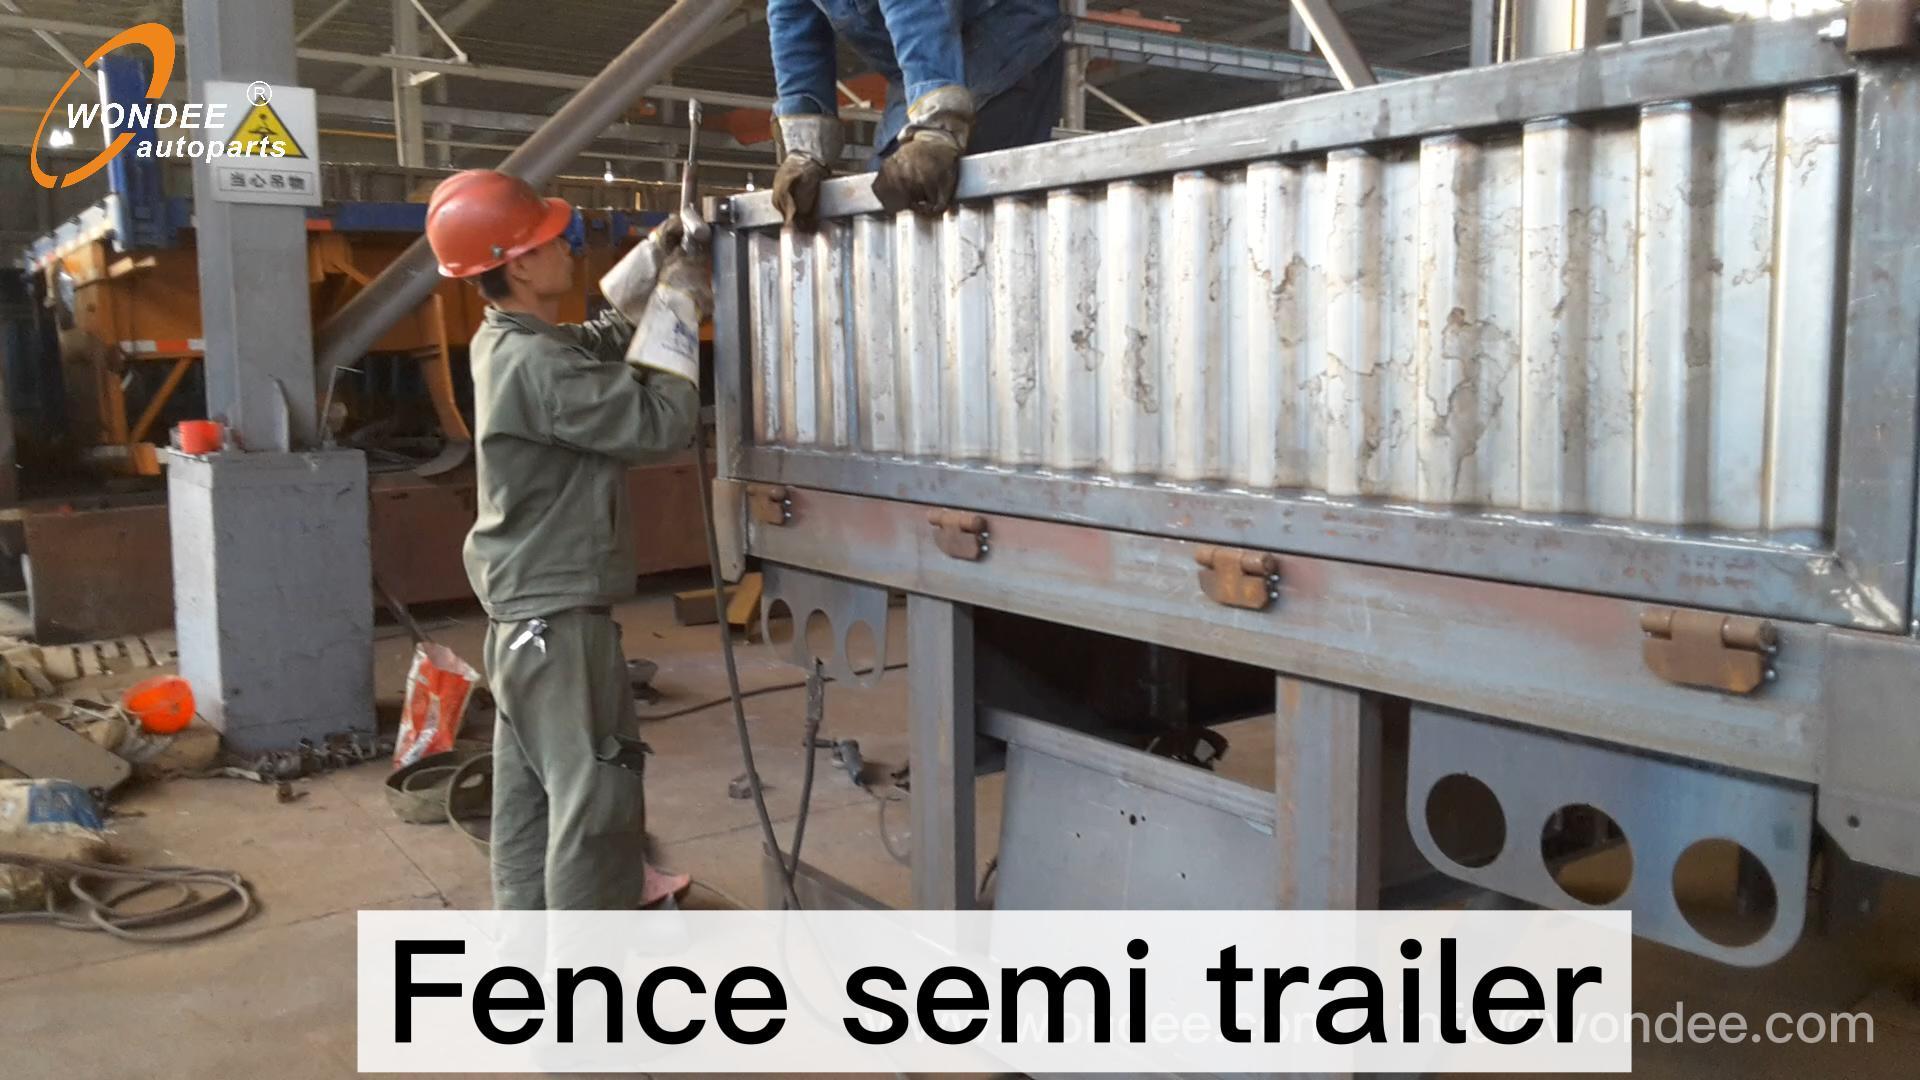 08-WONDEE Fence semi trailer